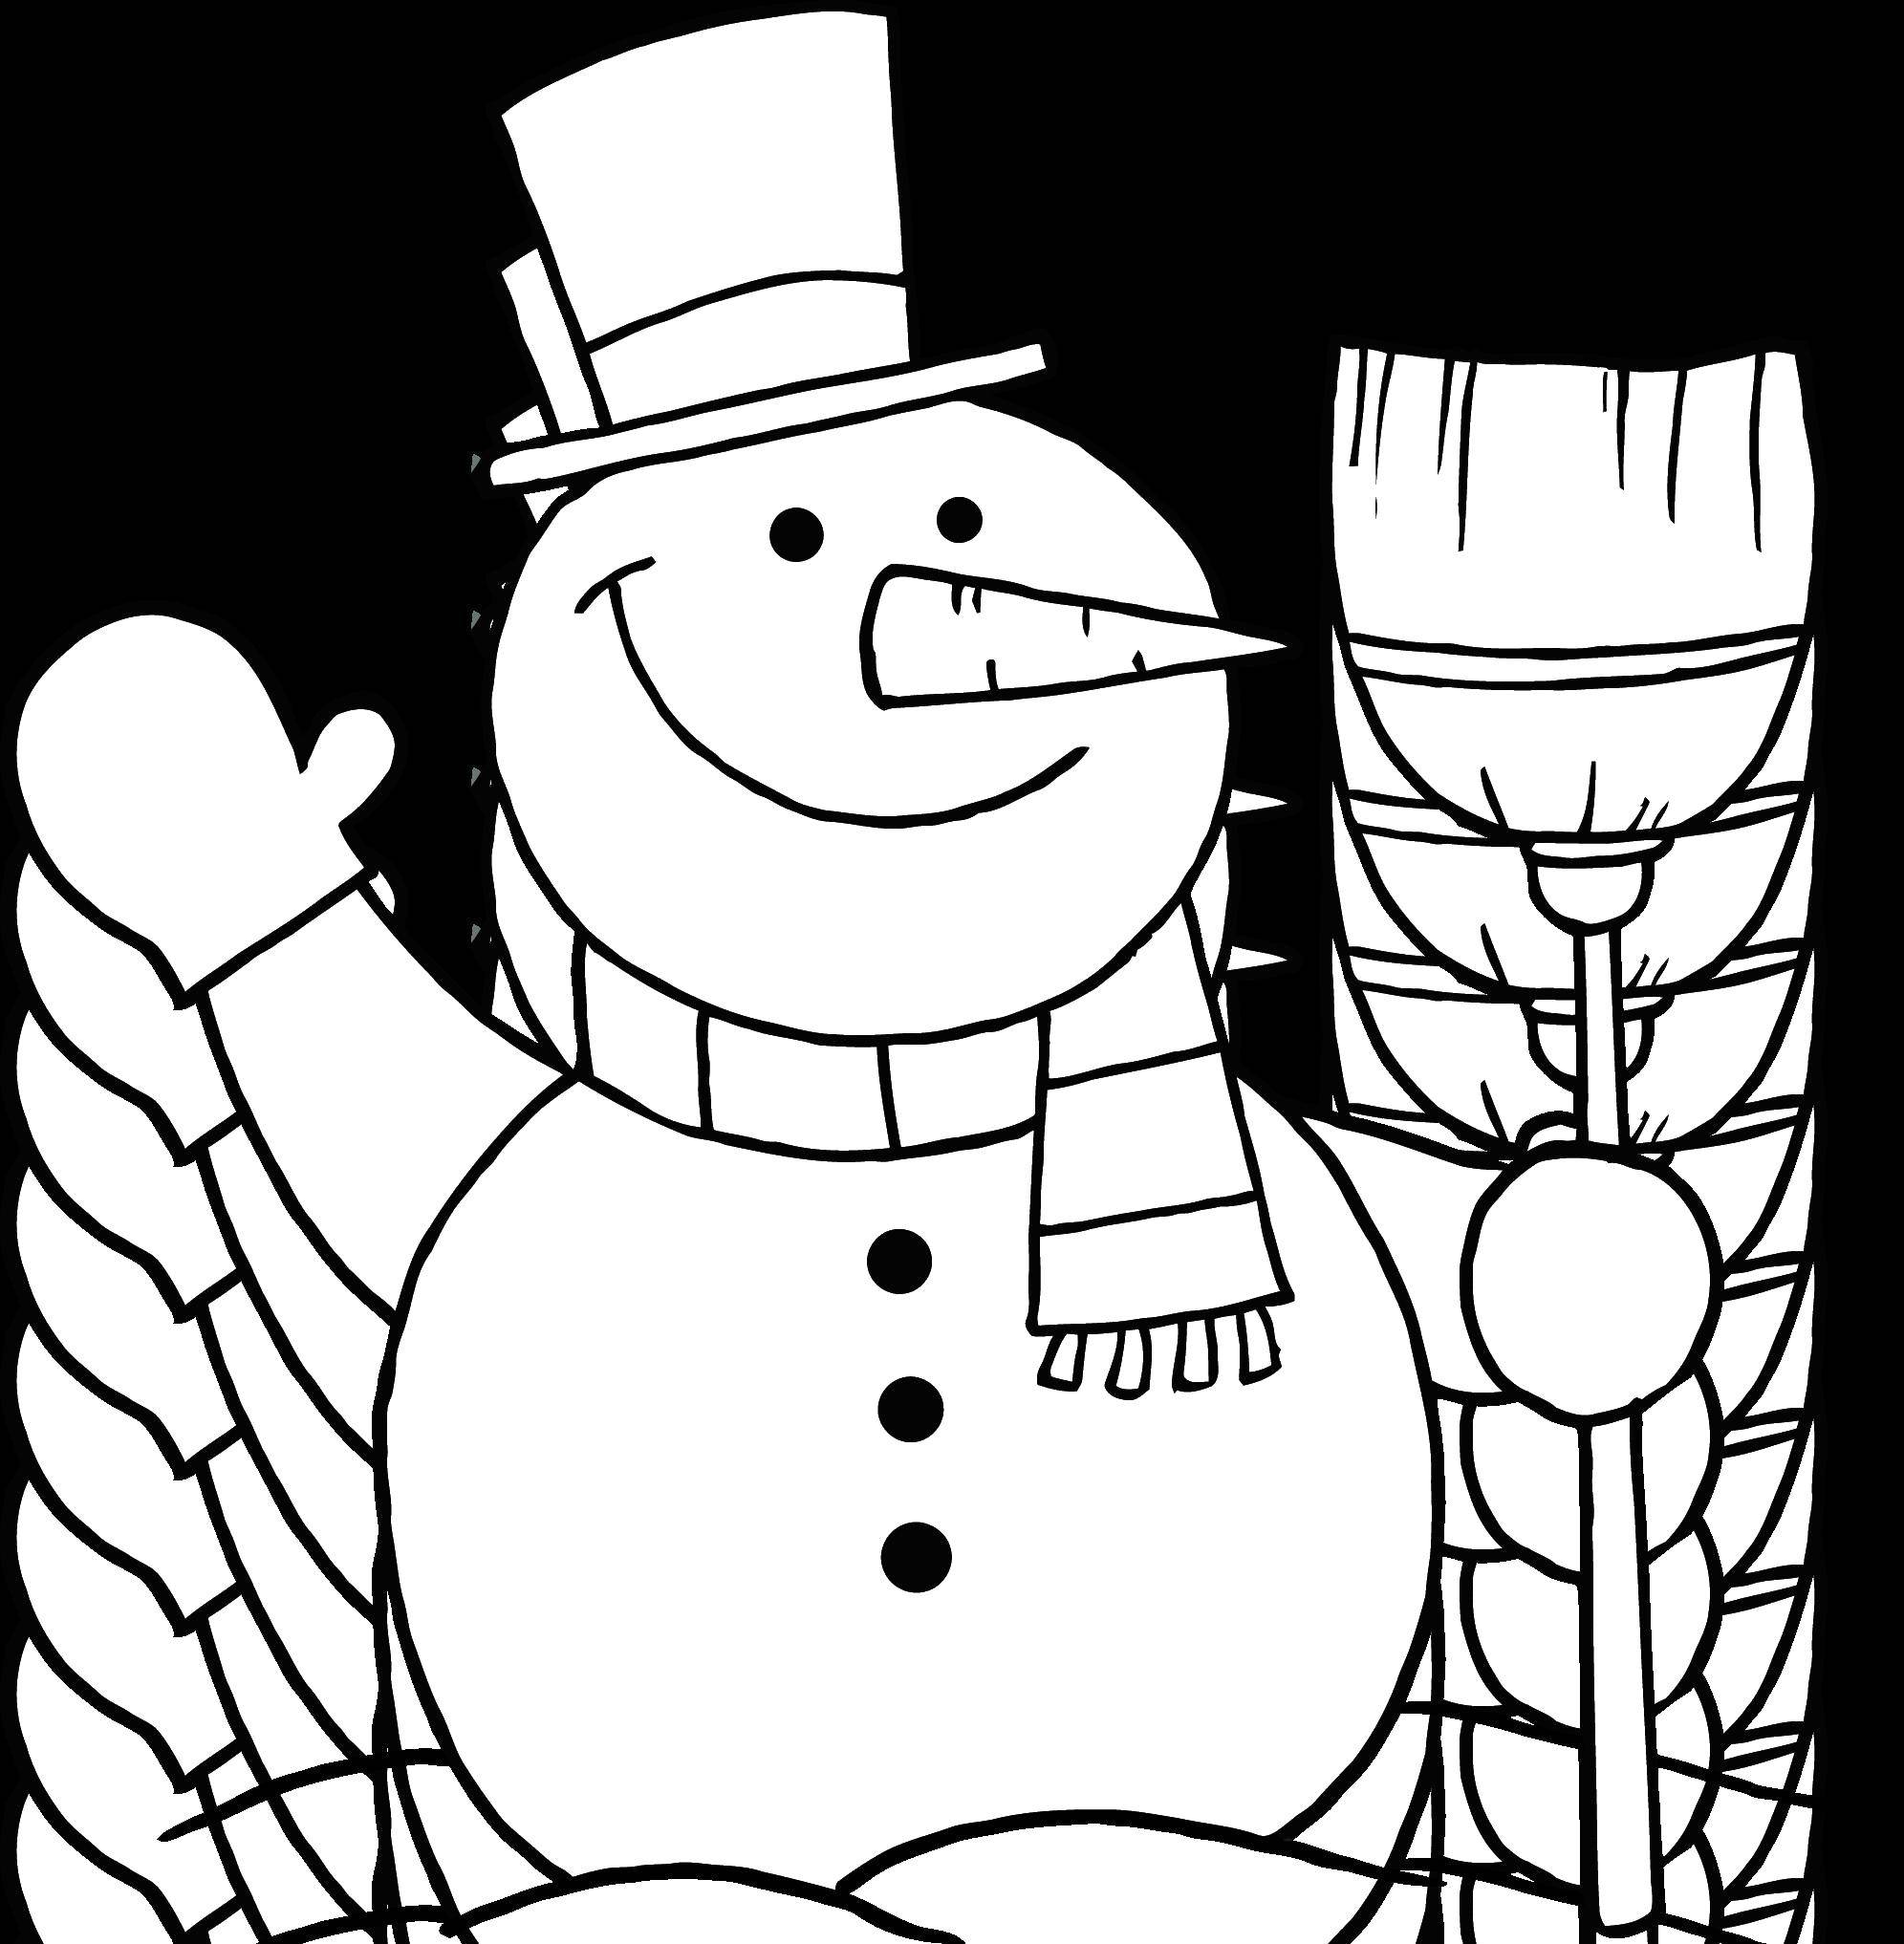 Название: Раскраска Снеговик. Категория: снеговик. Теги: снеговик, зима, снег.